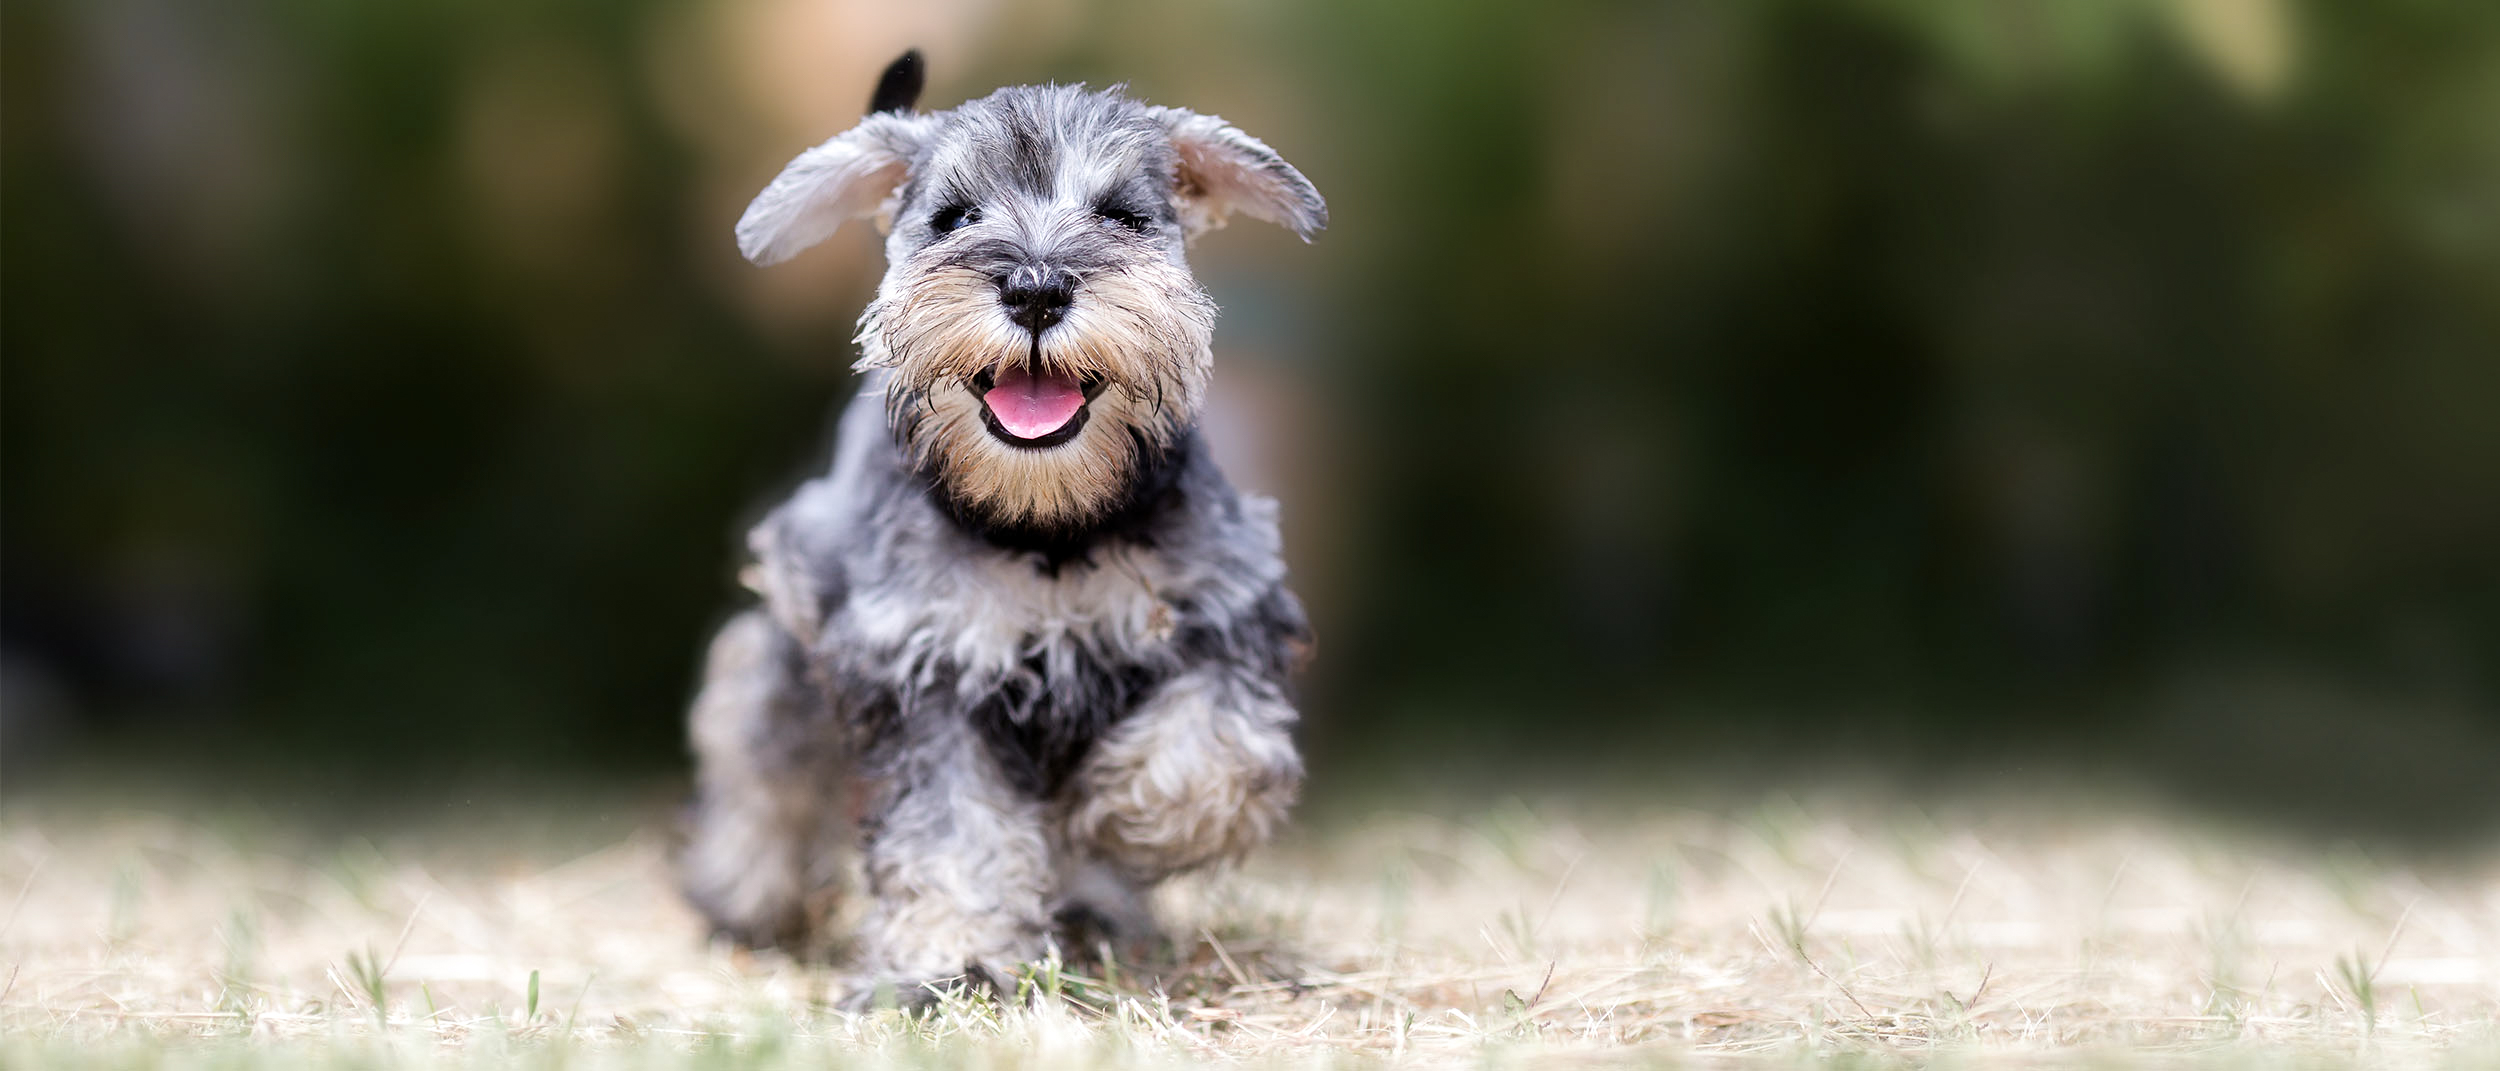 Puppy Miniature Schnauzer running outdoors in a field.